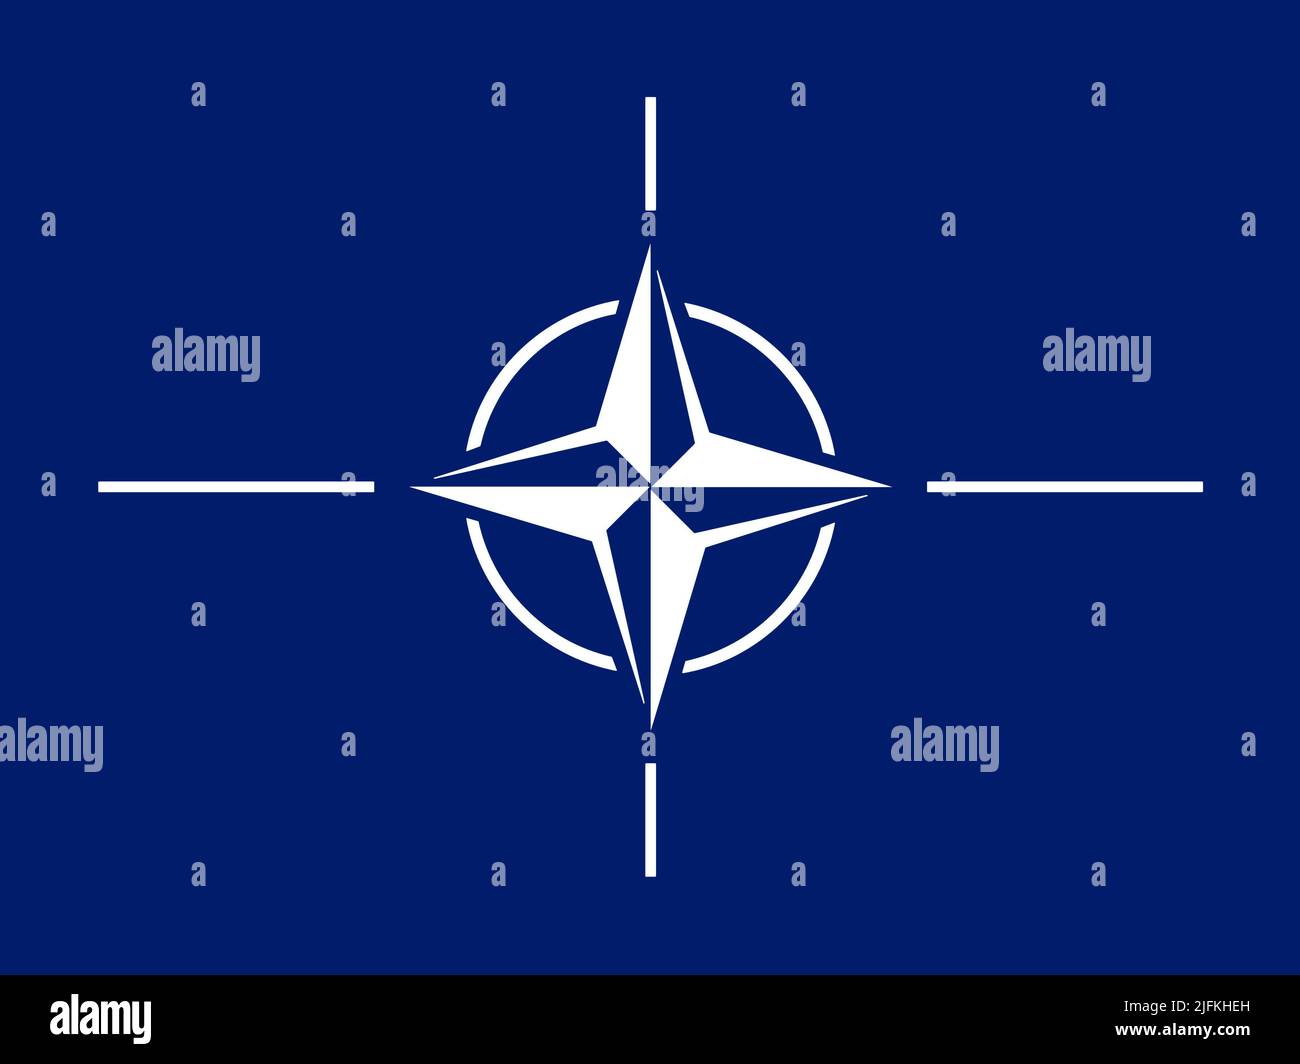 The flag of NATO (the North Atlantic Treaty Organization) illustration. Stock Photo